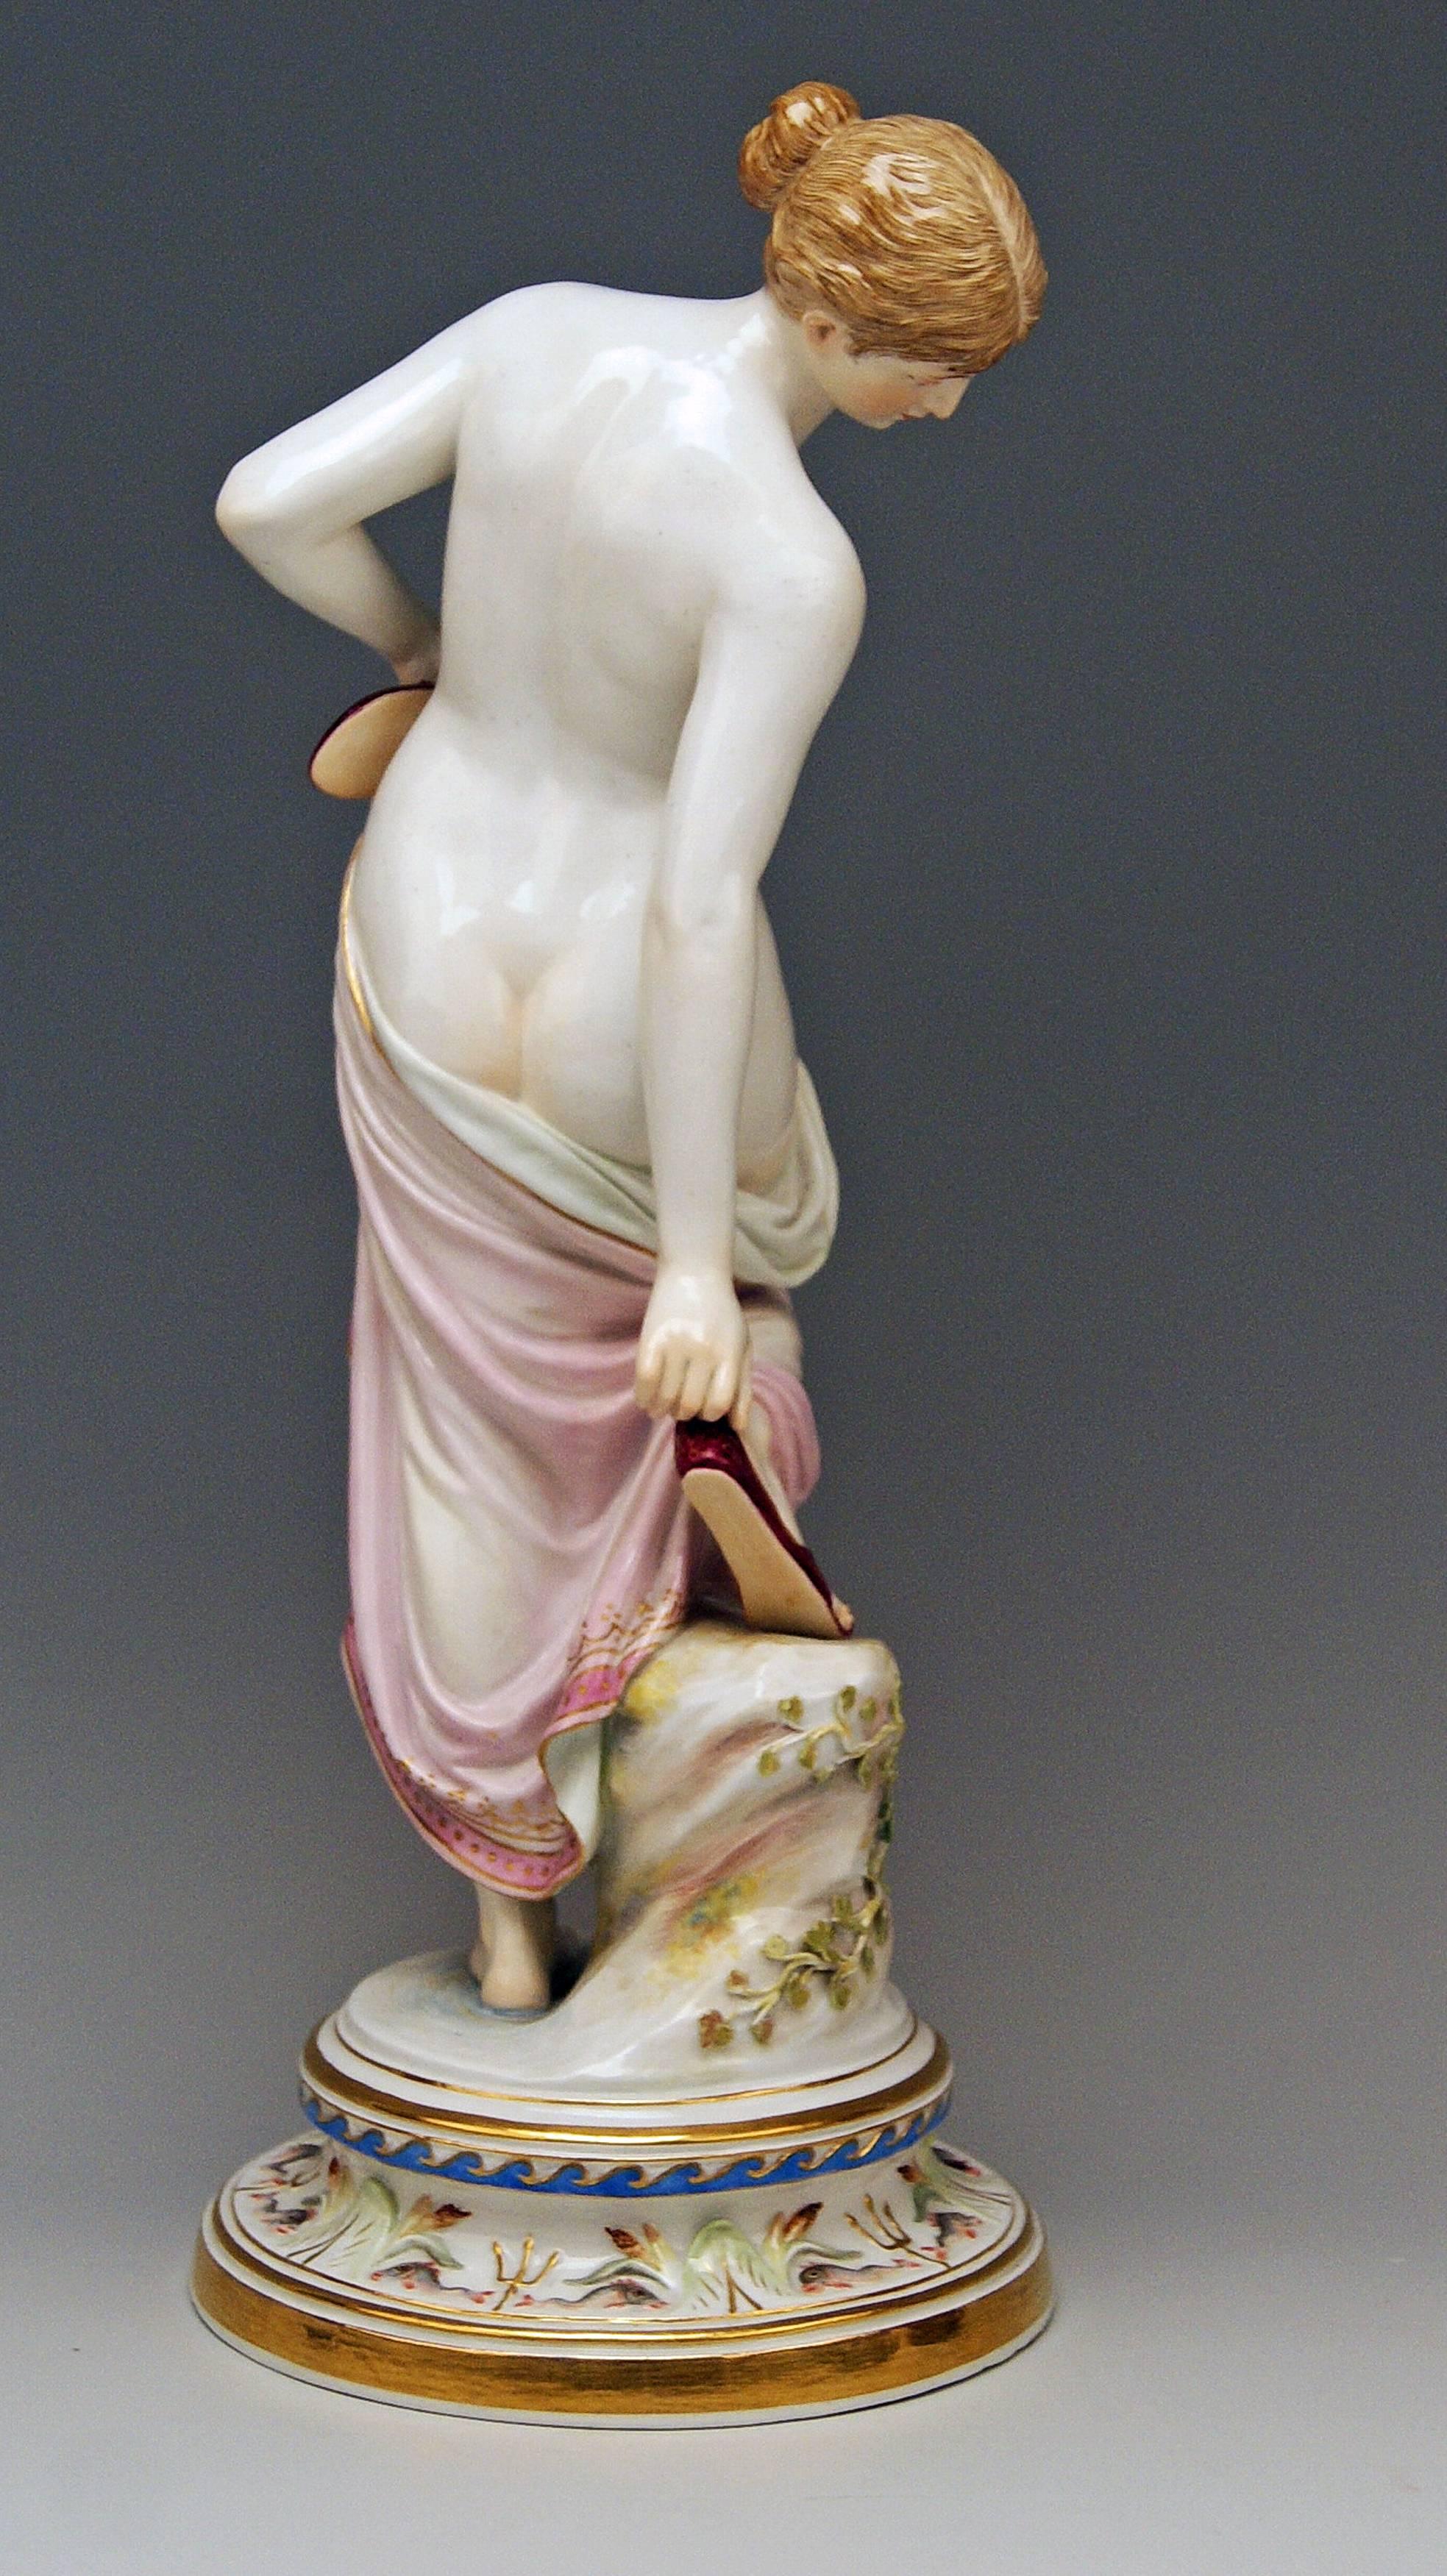 19th Century Meissen Female Nude Figurine after the Bath Model M 193 Robert Ockelmann